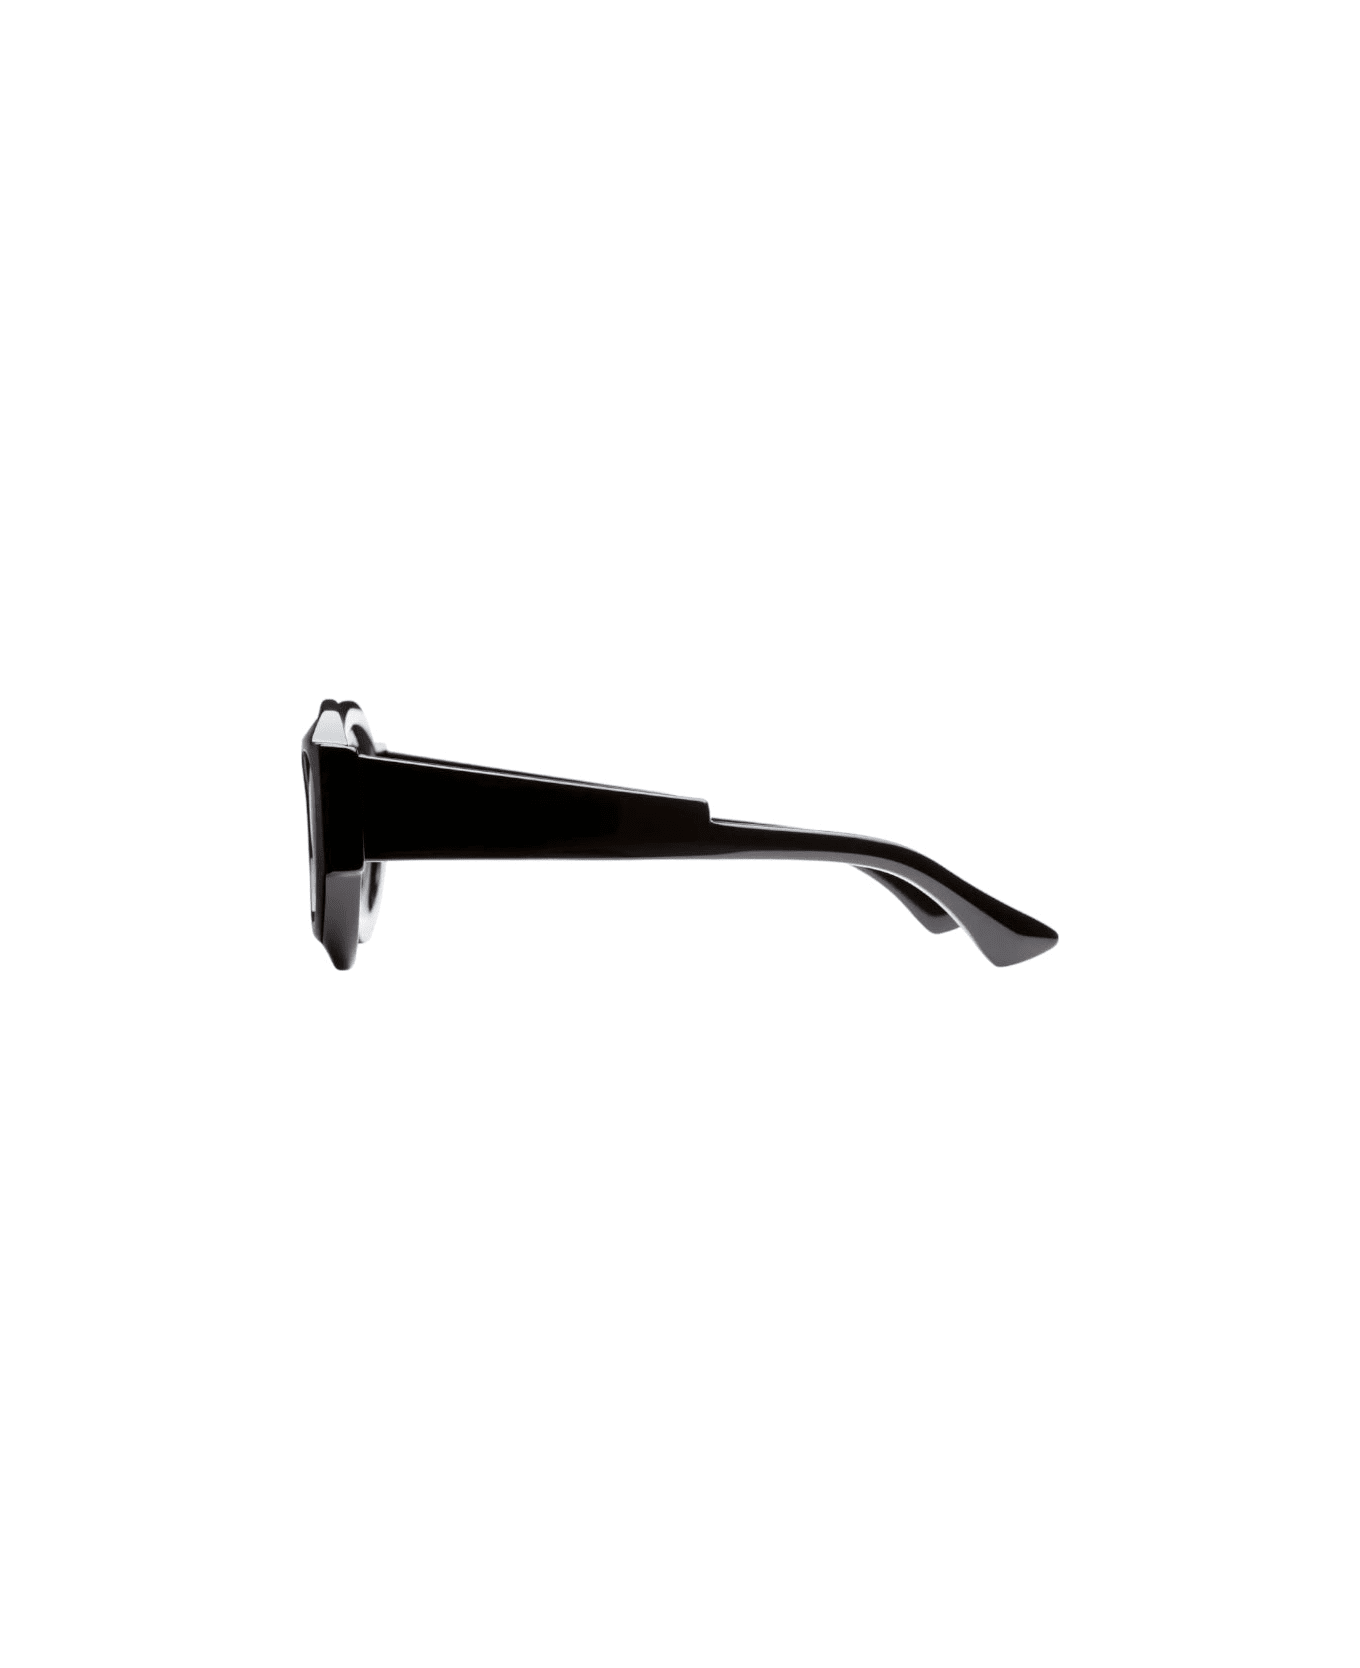 Kuboraum Maske X22 - Black Sunglasses サングラス